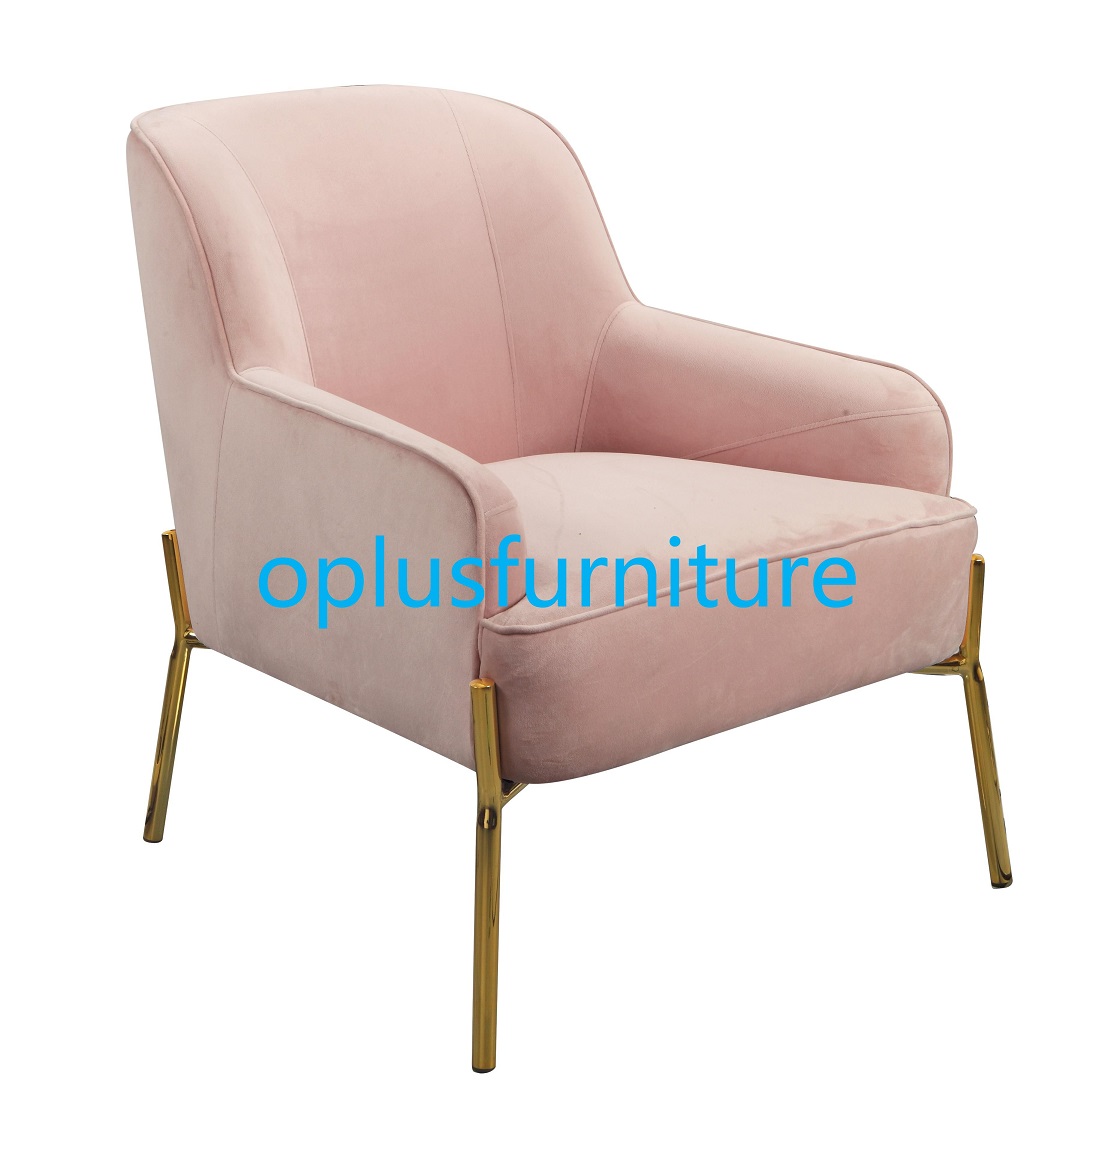 modern wholeslae gold leg upholstery pink leisure lounge arm chair 